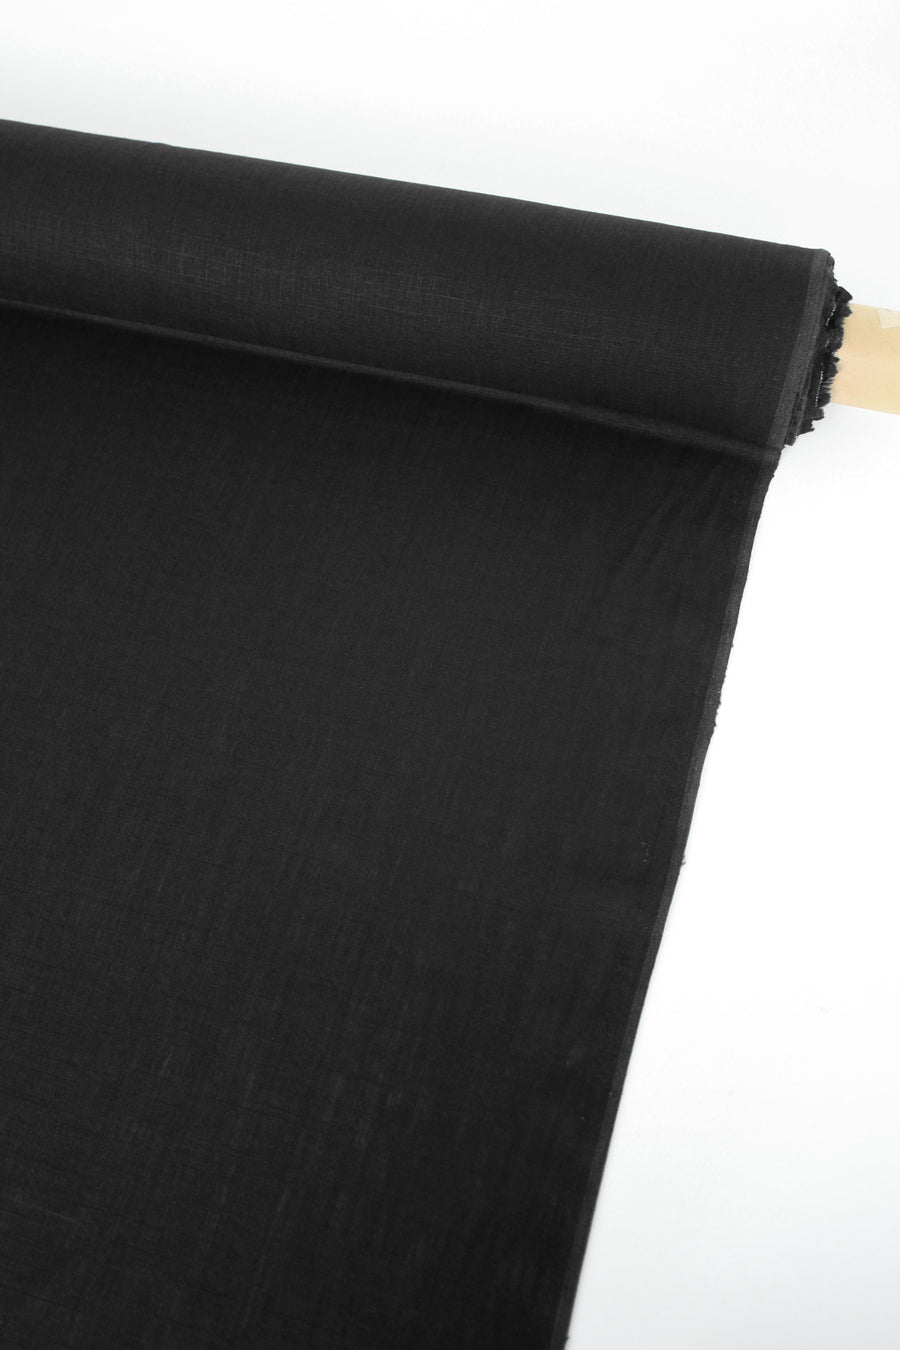 Chester - Soft Wash Linen | Black